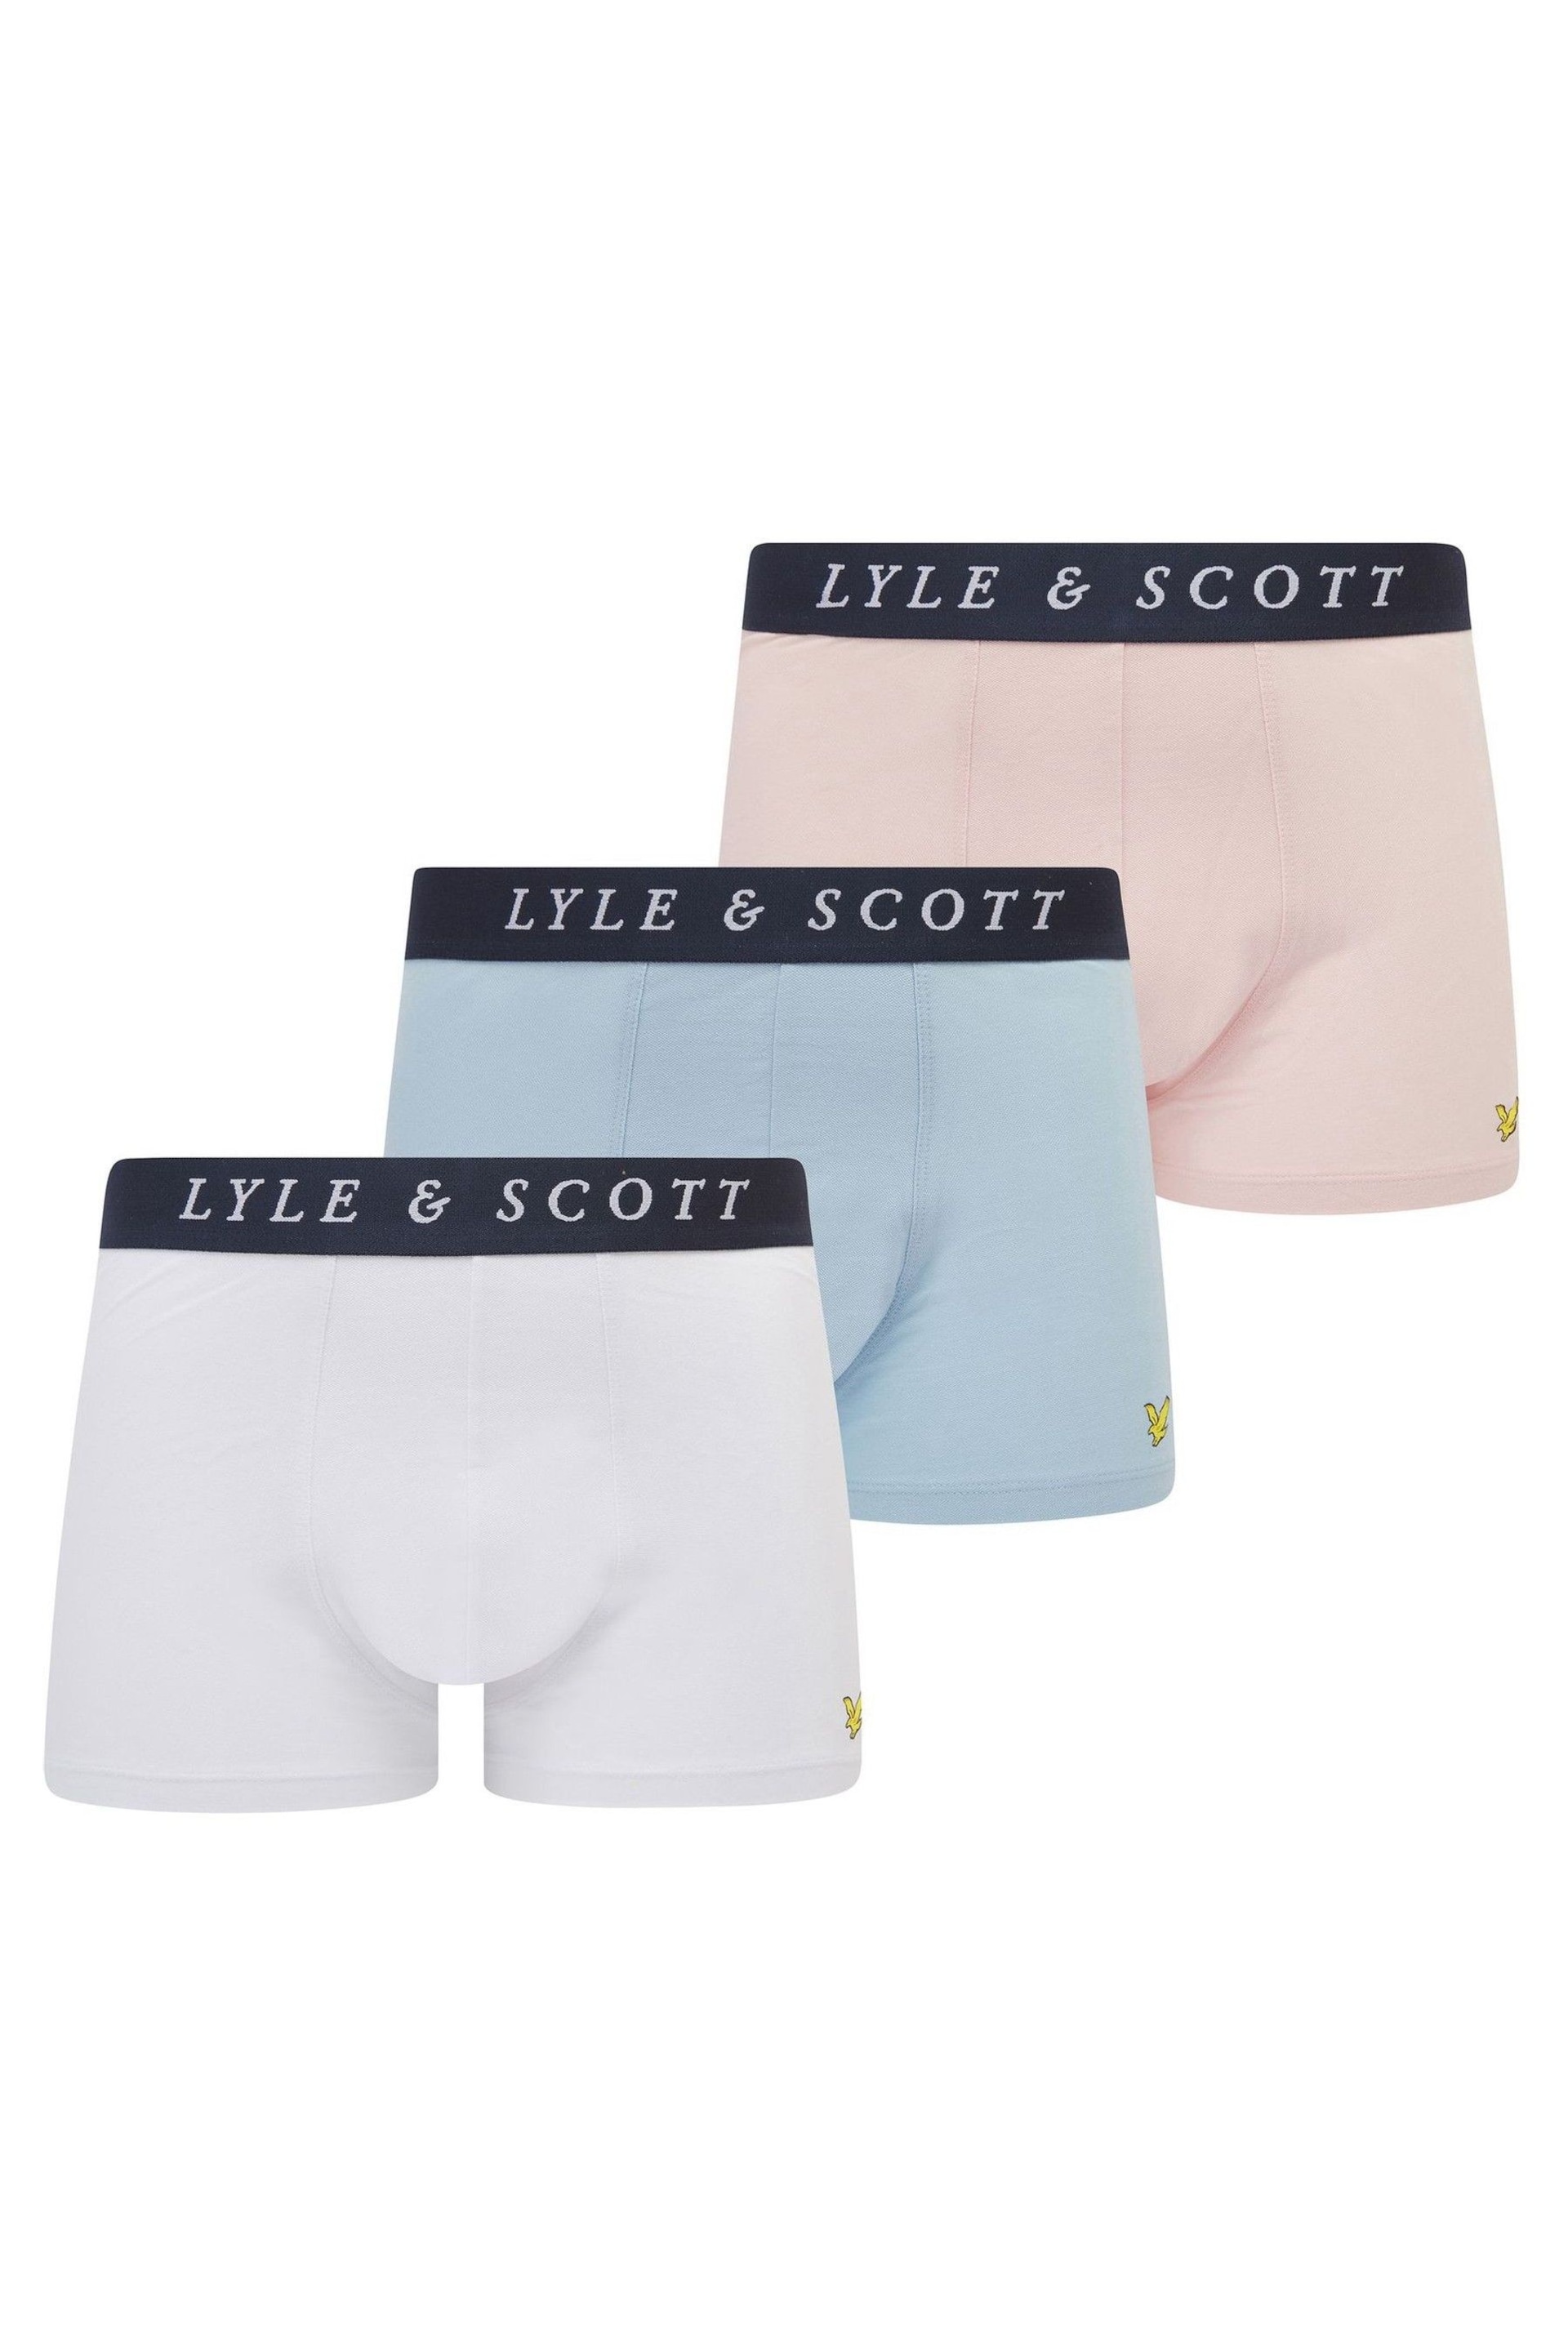 Lyle & Scott Multi Underwear Trunks 3 Pack - Image 1 of 4